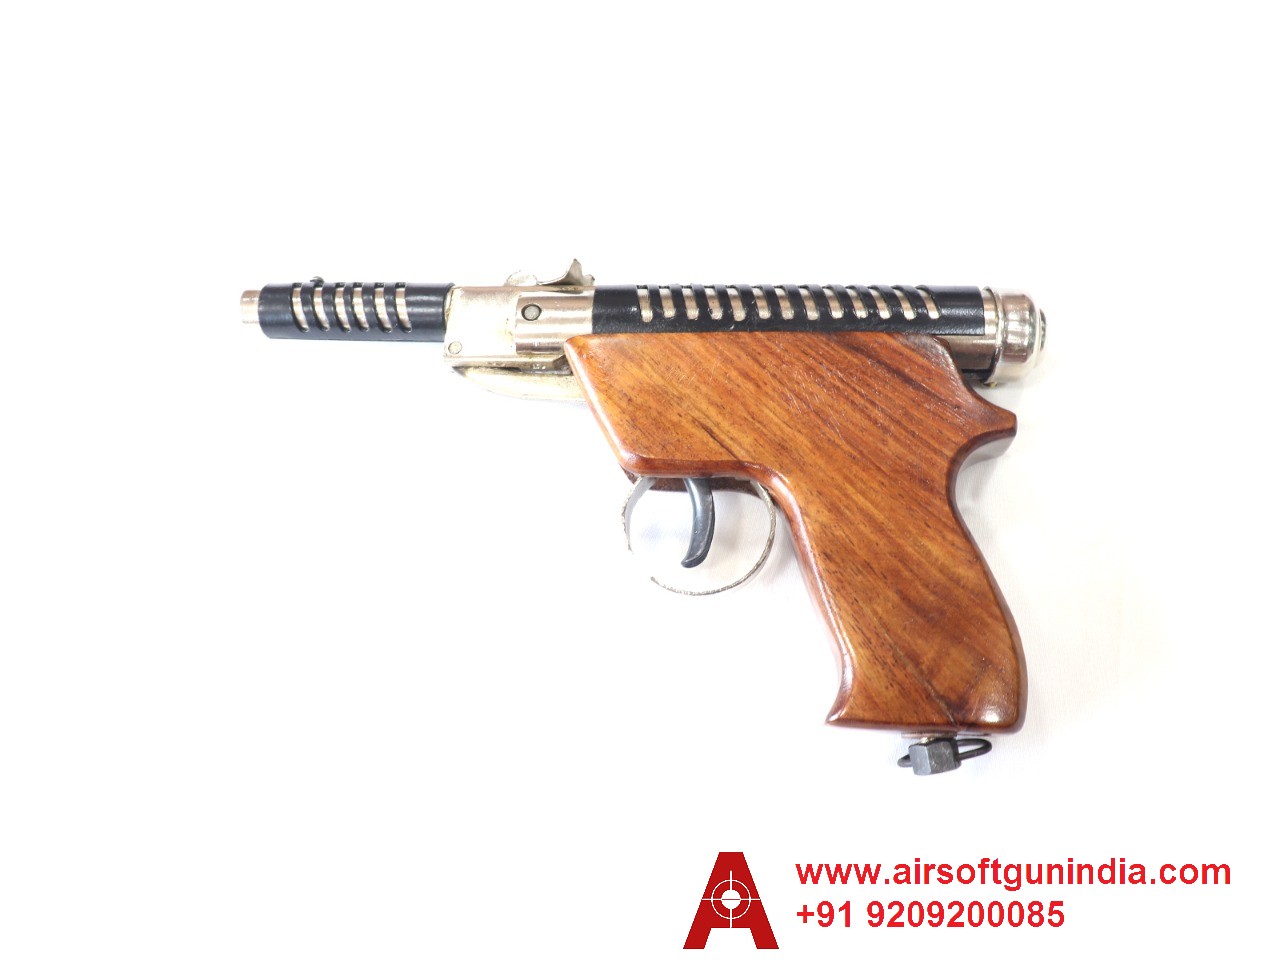 Batman 007 Wooden Single-shot .177 Caliber / 4.5 Mm Indian Air Pistol By Airsoft Gun India